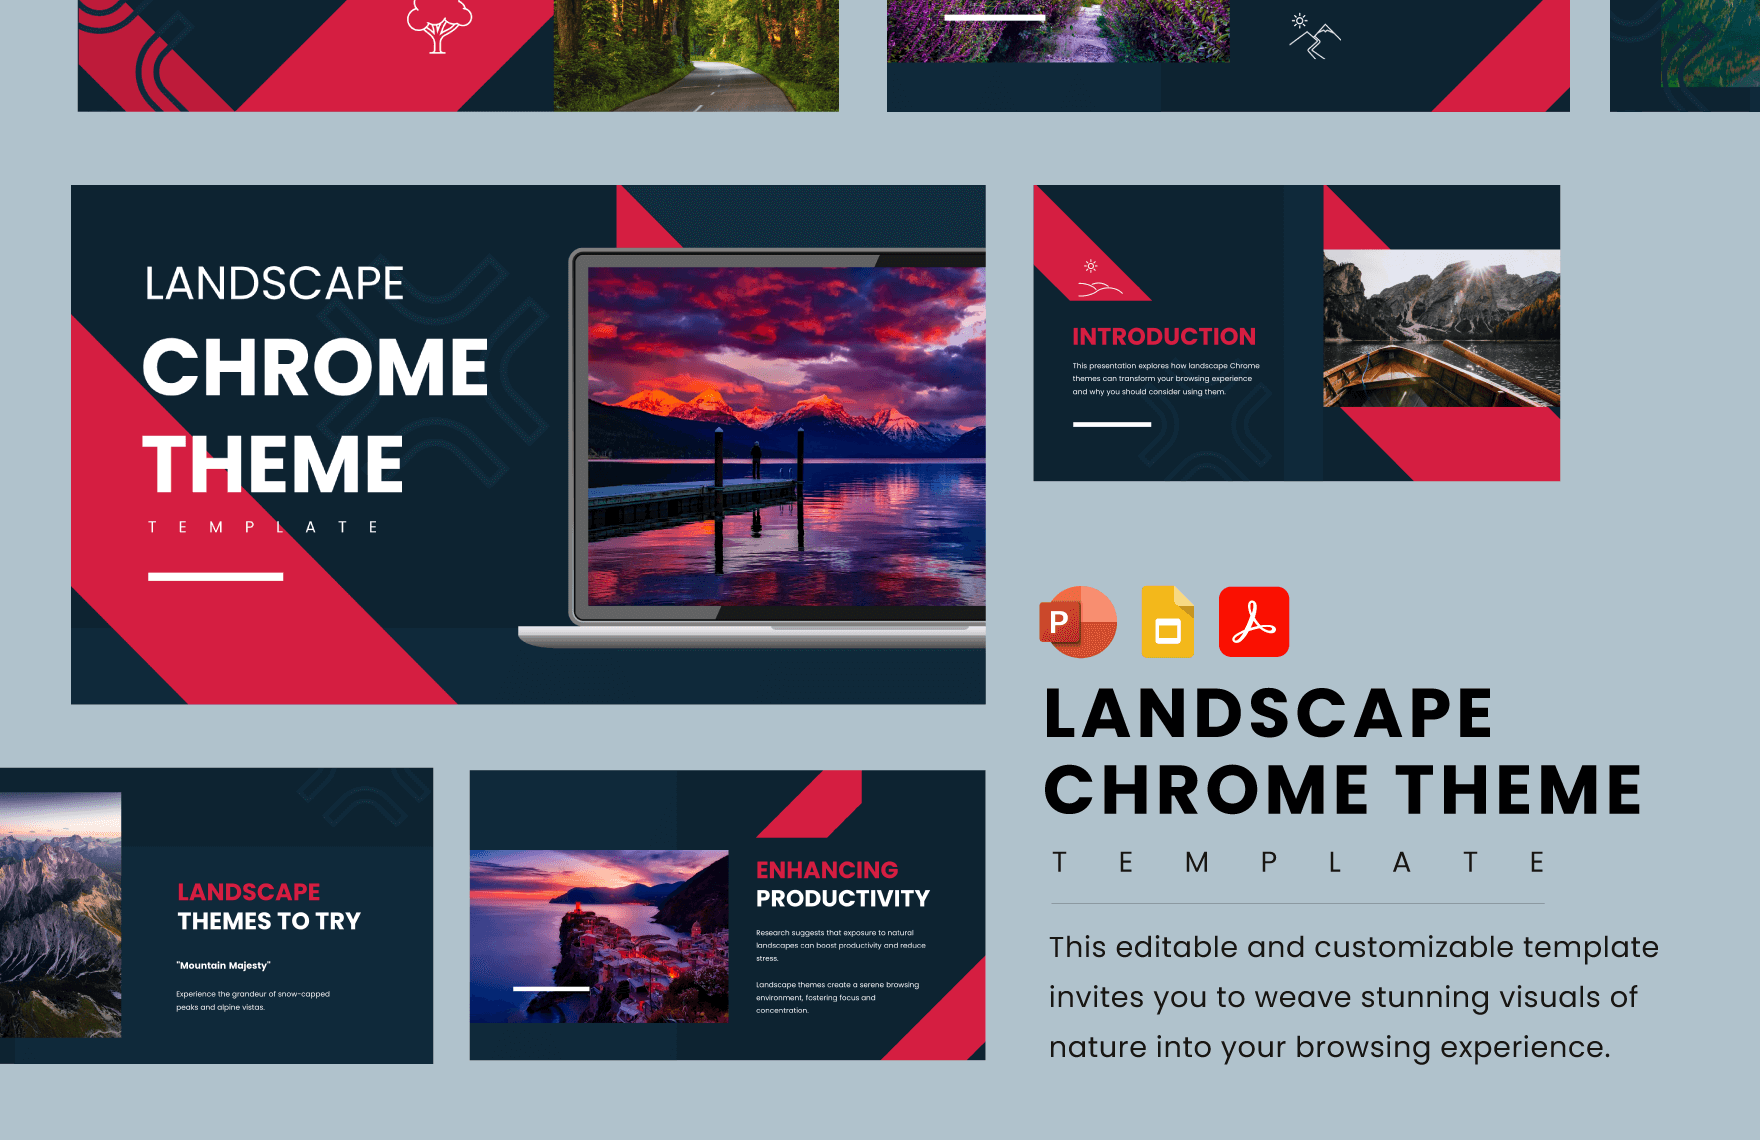 Landscape Chrome Themes Template